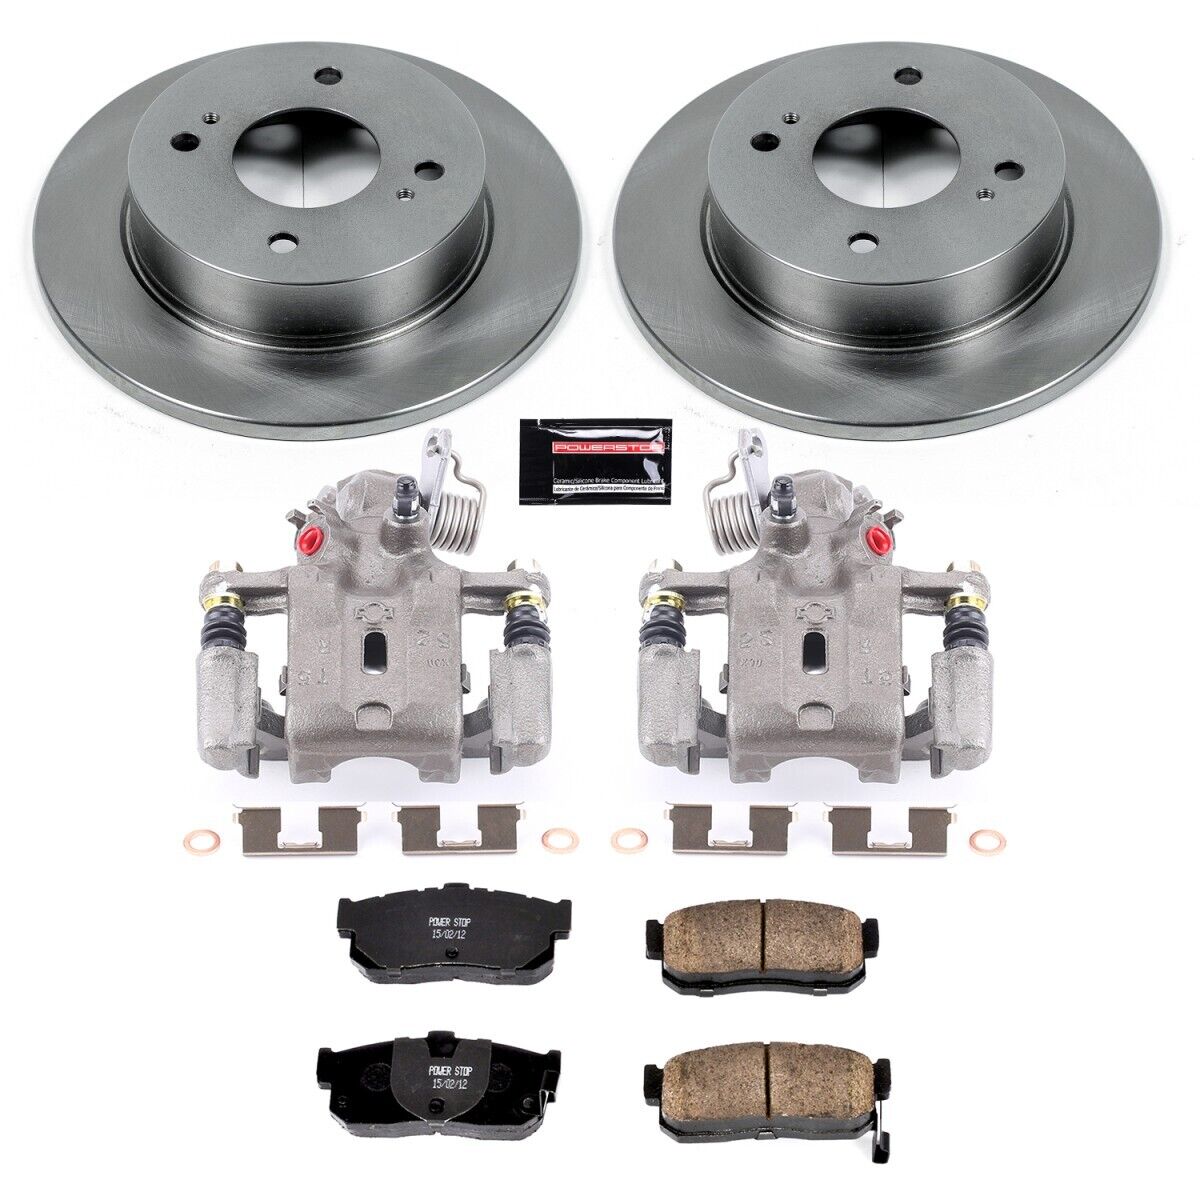 KCOE740 Powerstop 2-Wheel Set Brake Disc and Caliper Kits Rear for Nissan Sentra